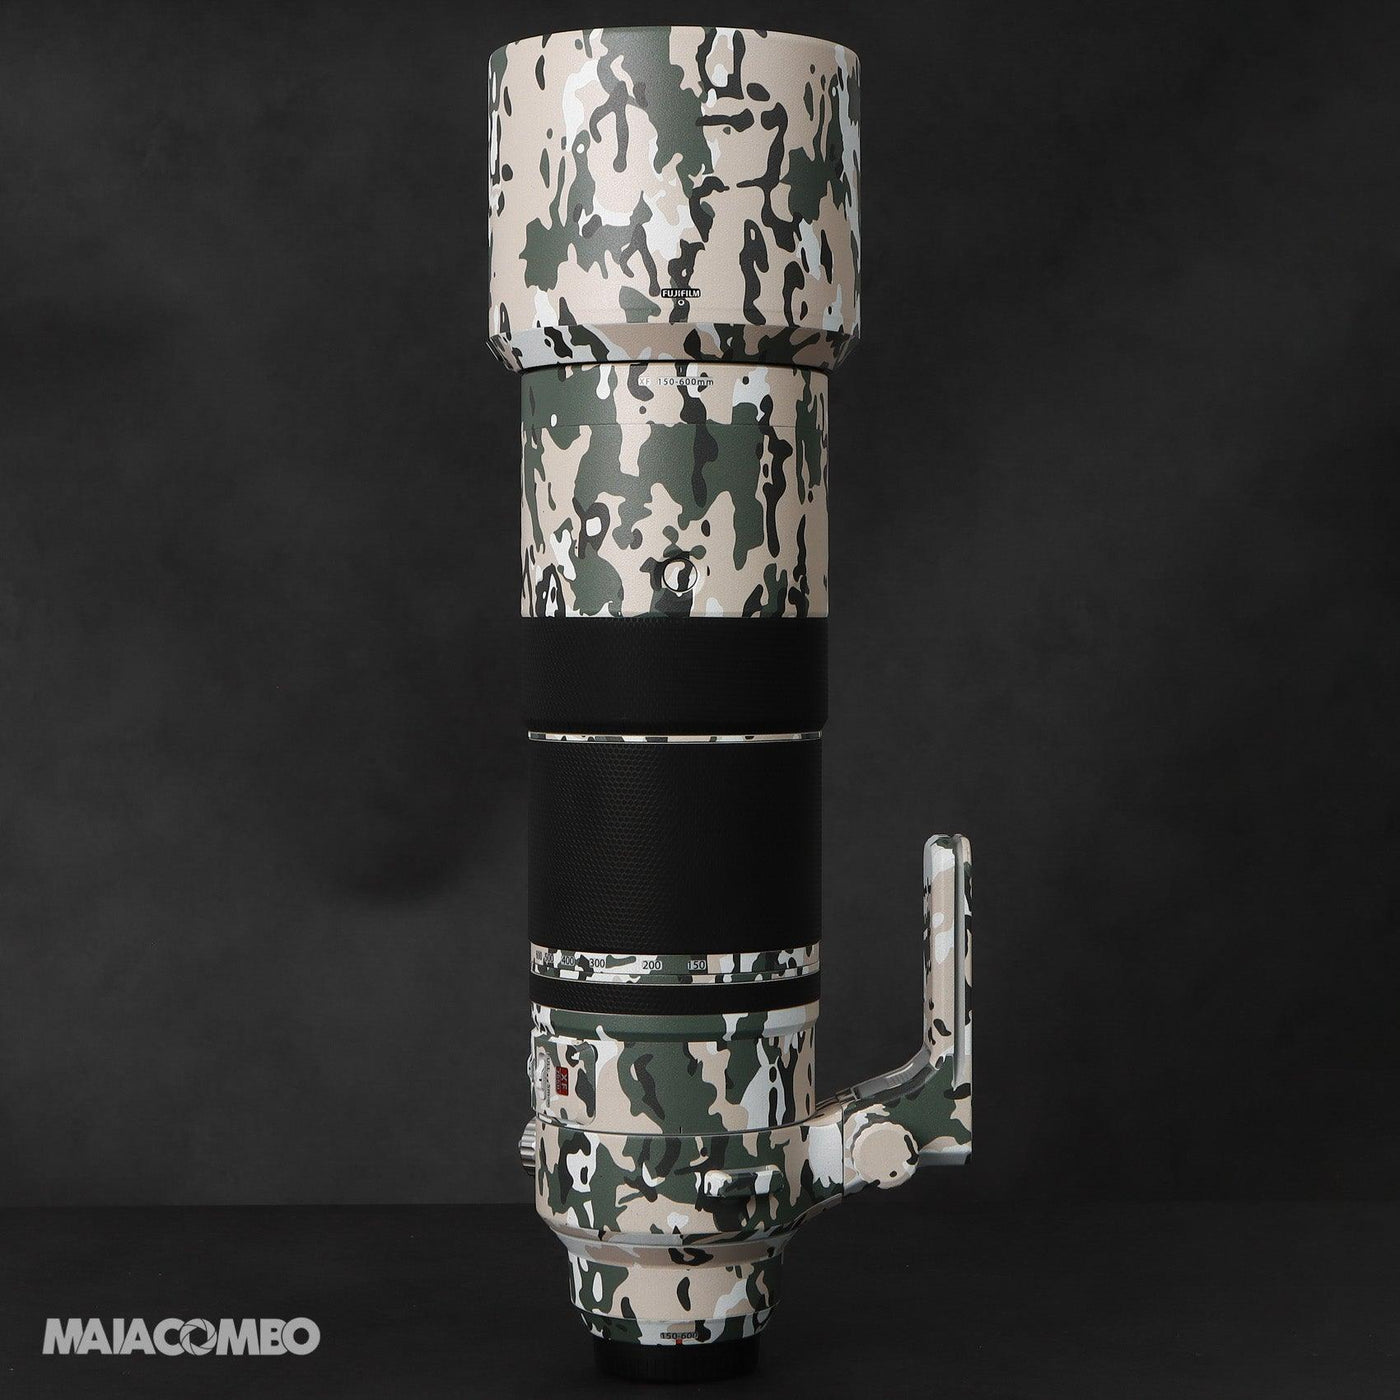 FUJIFILM XF 150-600mm F5.6-8 R LM OIS WR Lens skin - MAIACOMBO